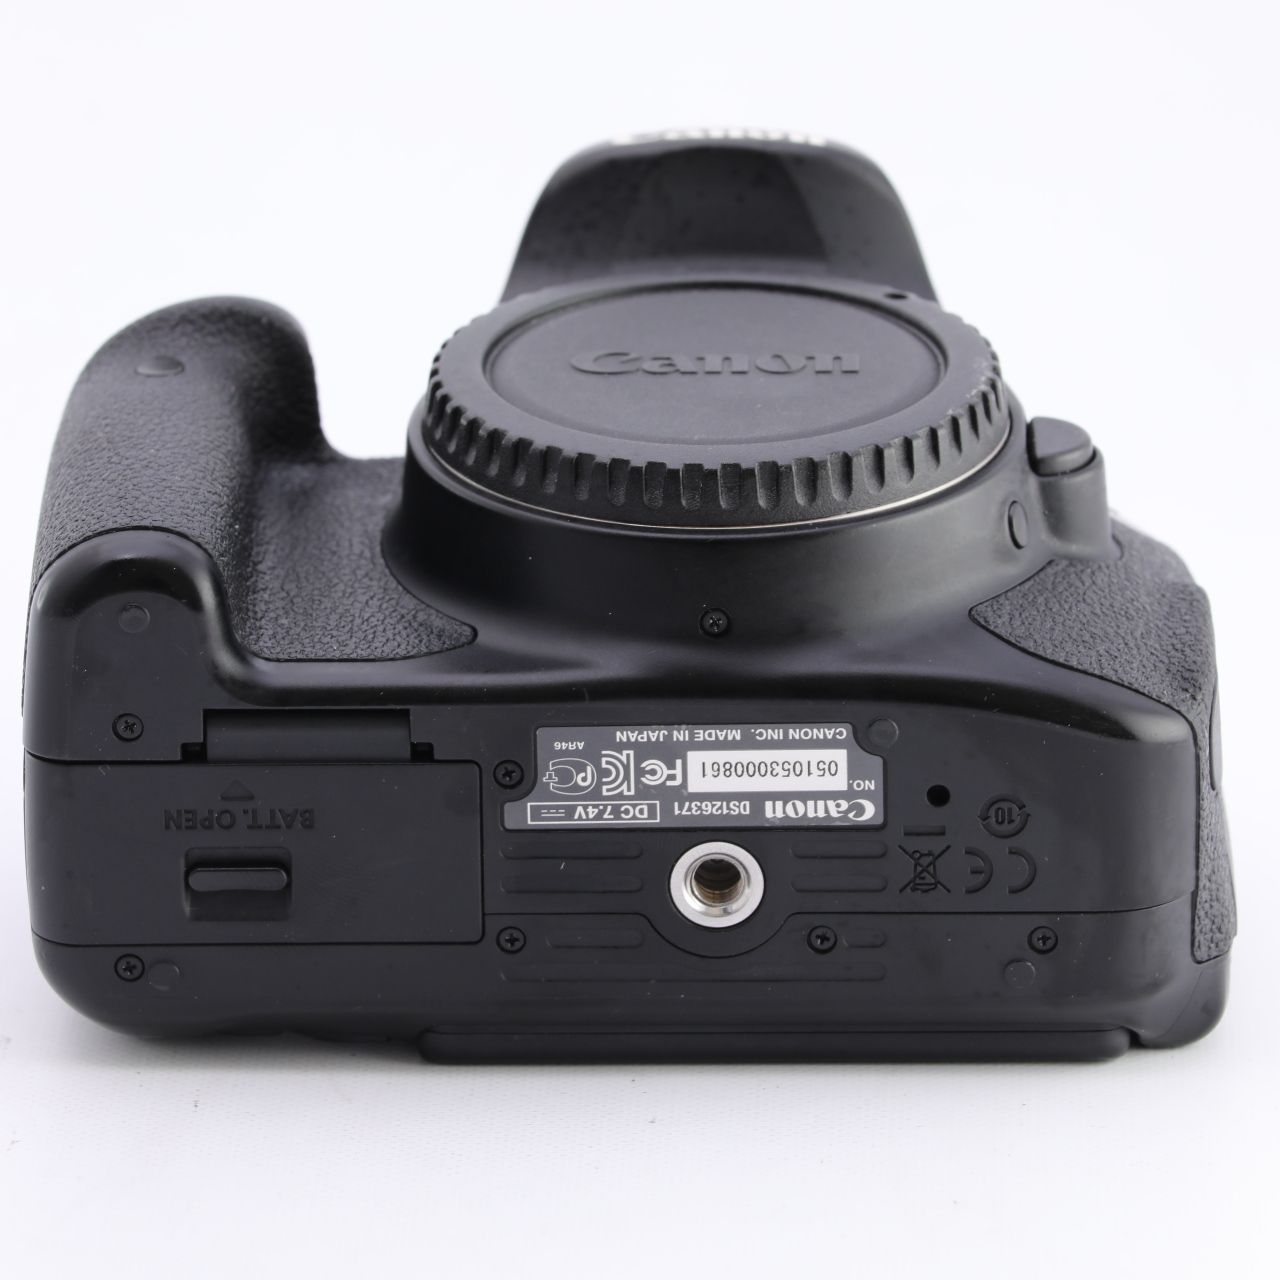 Canon キヤノン デジタル一眼レフカメラ EOS Kiss X6i ボディ カメラ本舗｜Camera honpo メルカリ